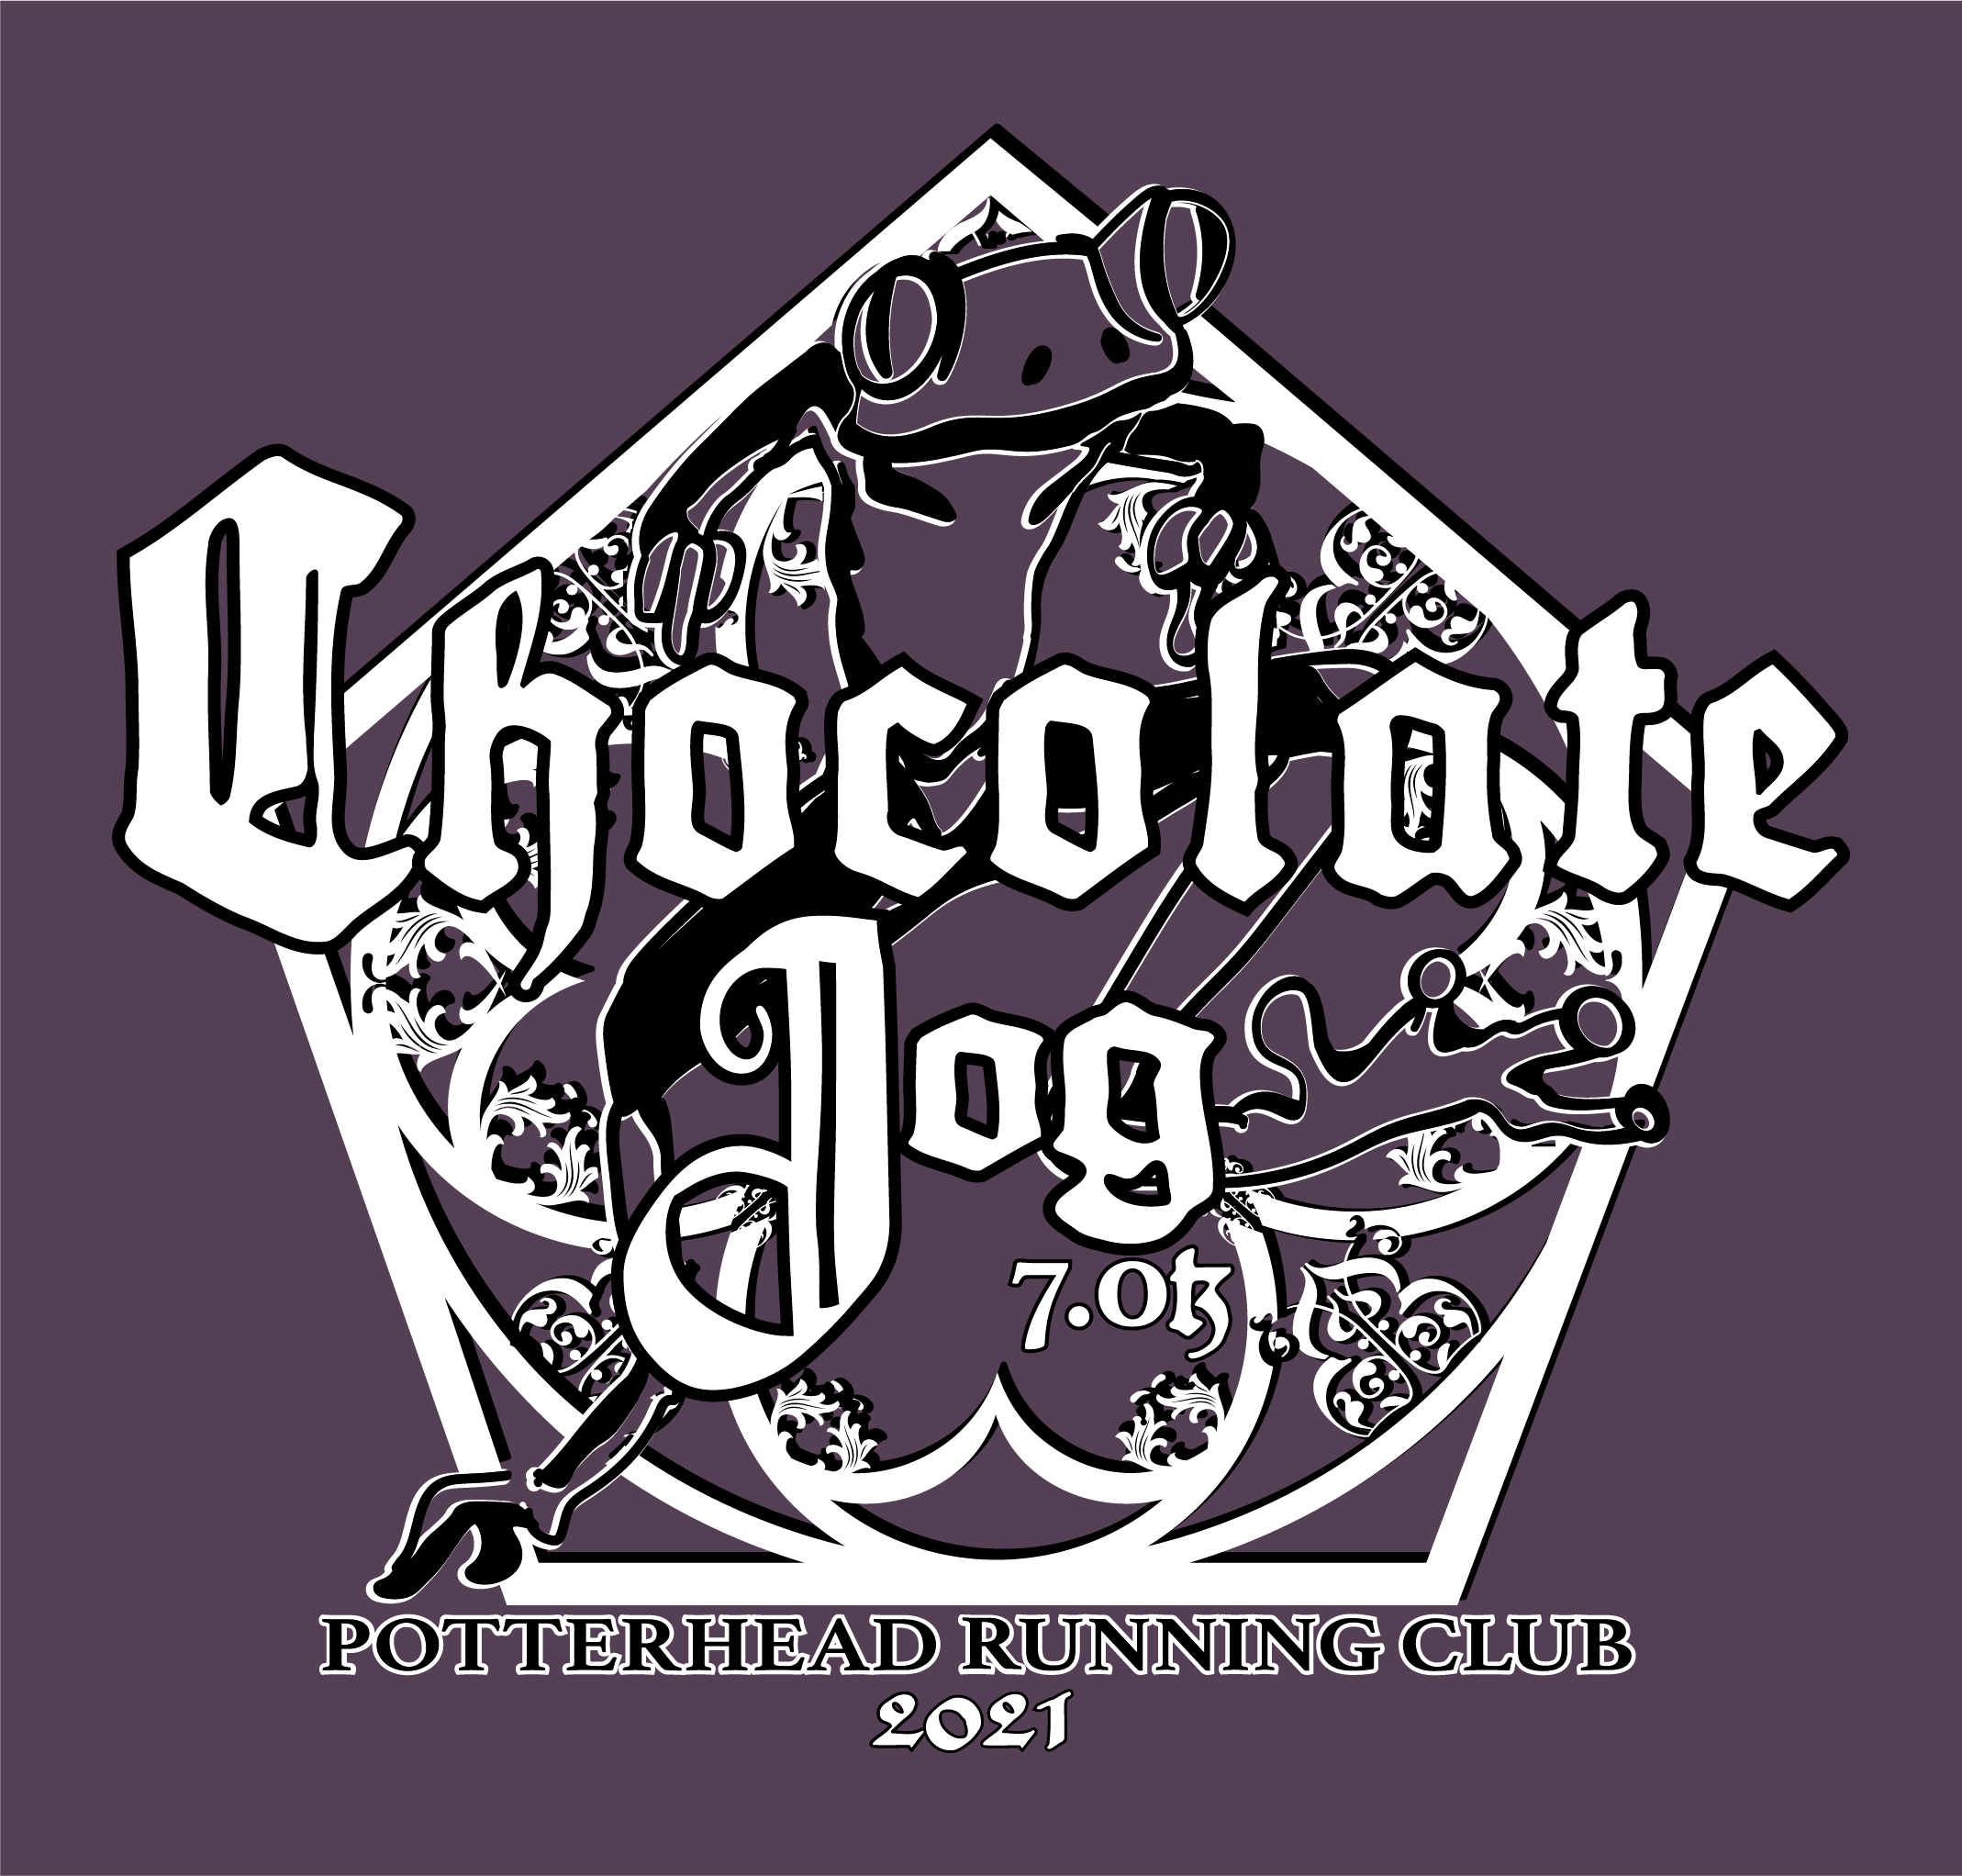 Chocolate Jog 7k shirt design - zoomed